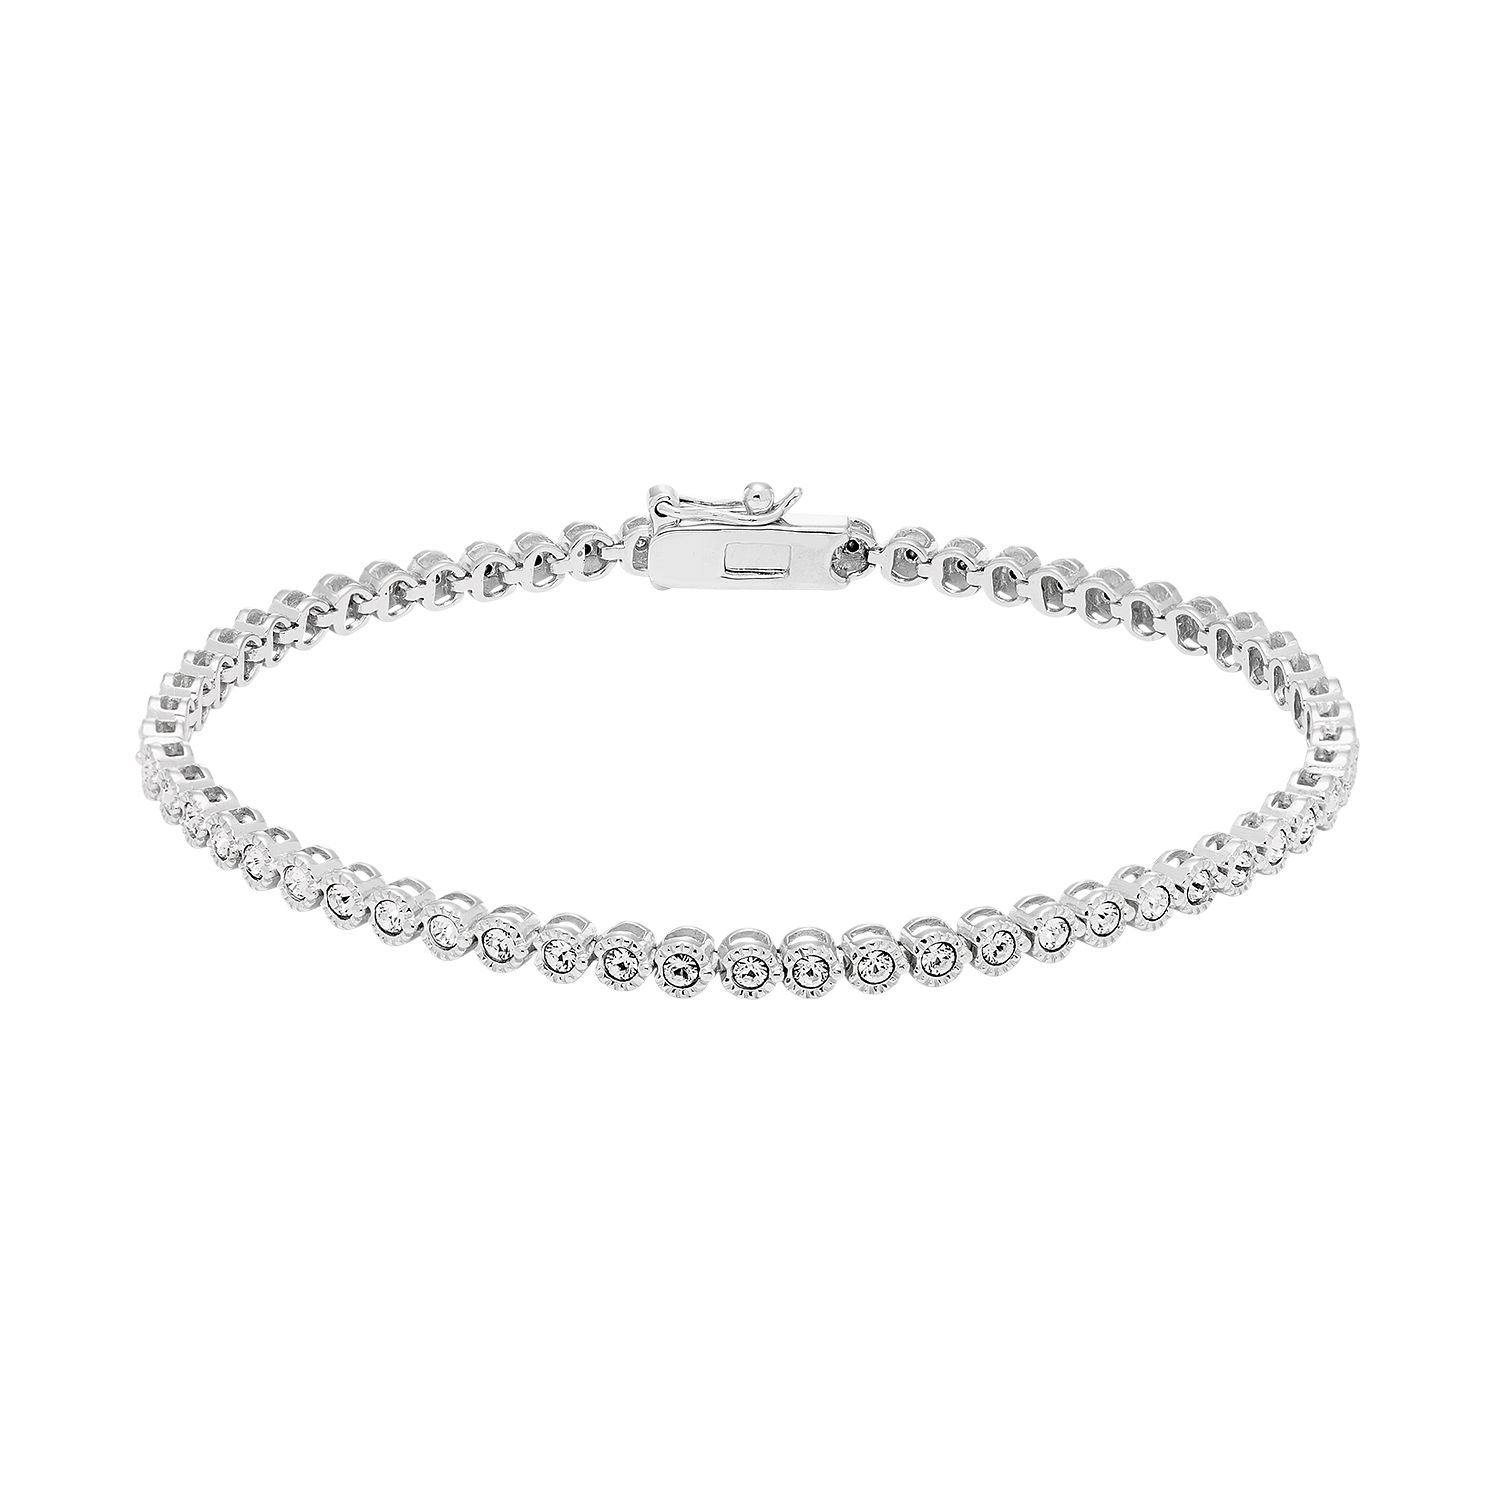 crystal tennis bracelet